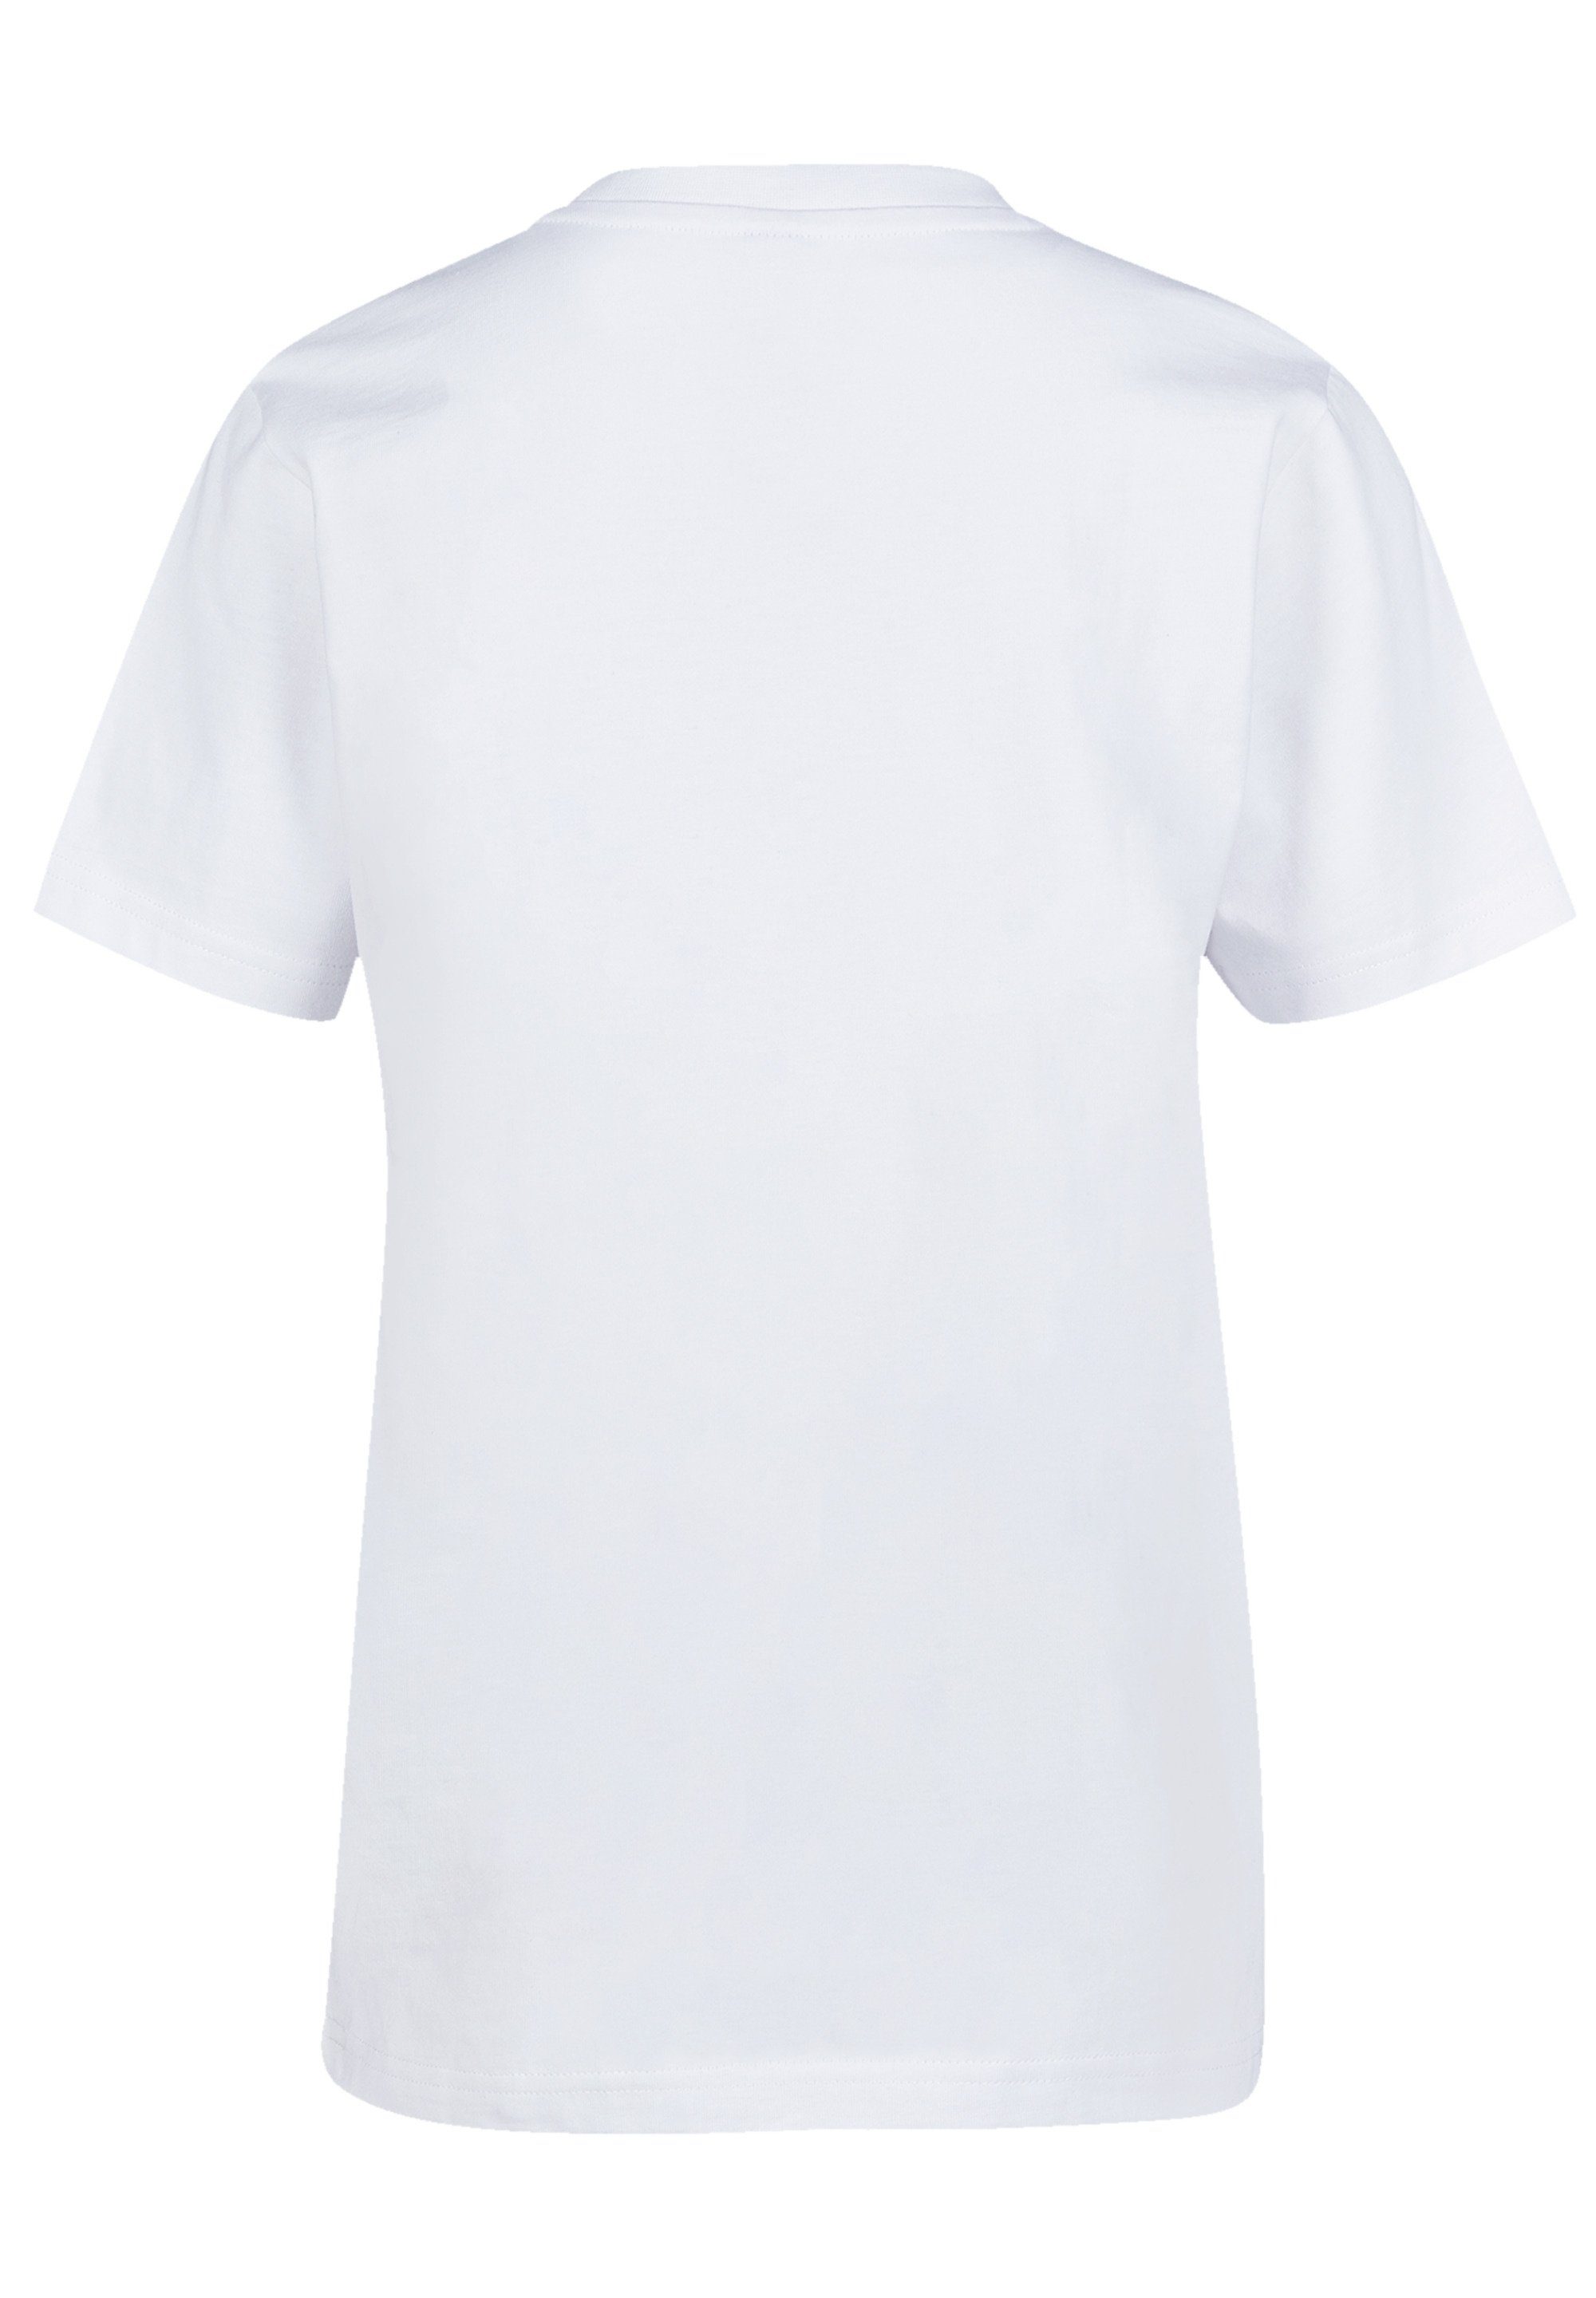 F4NT4STIC T-Shirt Classic Qualität Premium weiß Band Logo The Jam